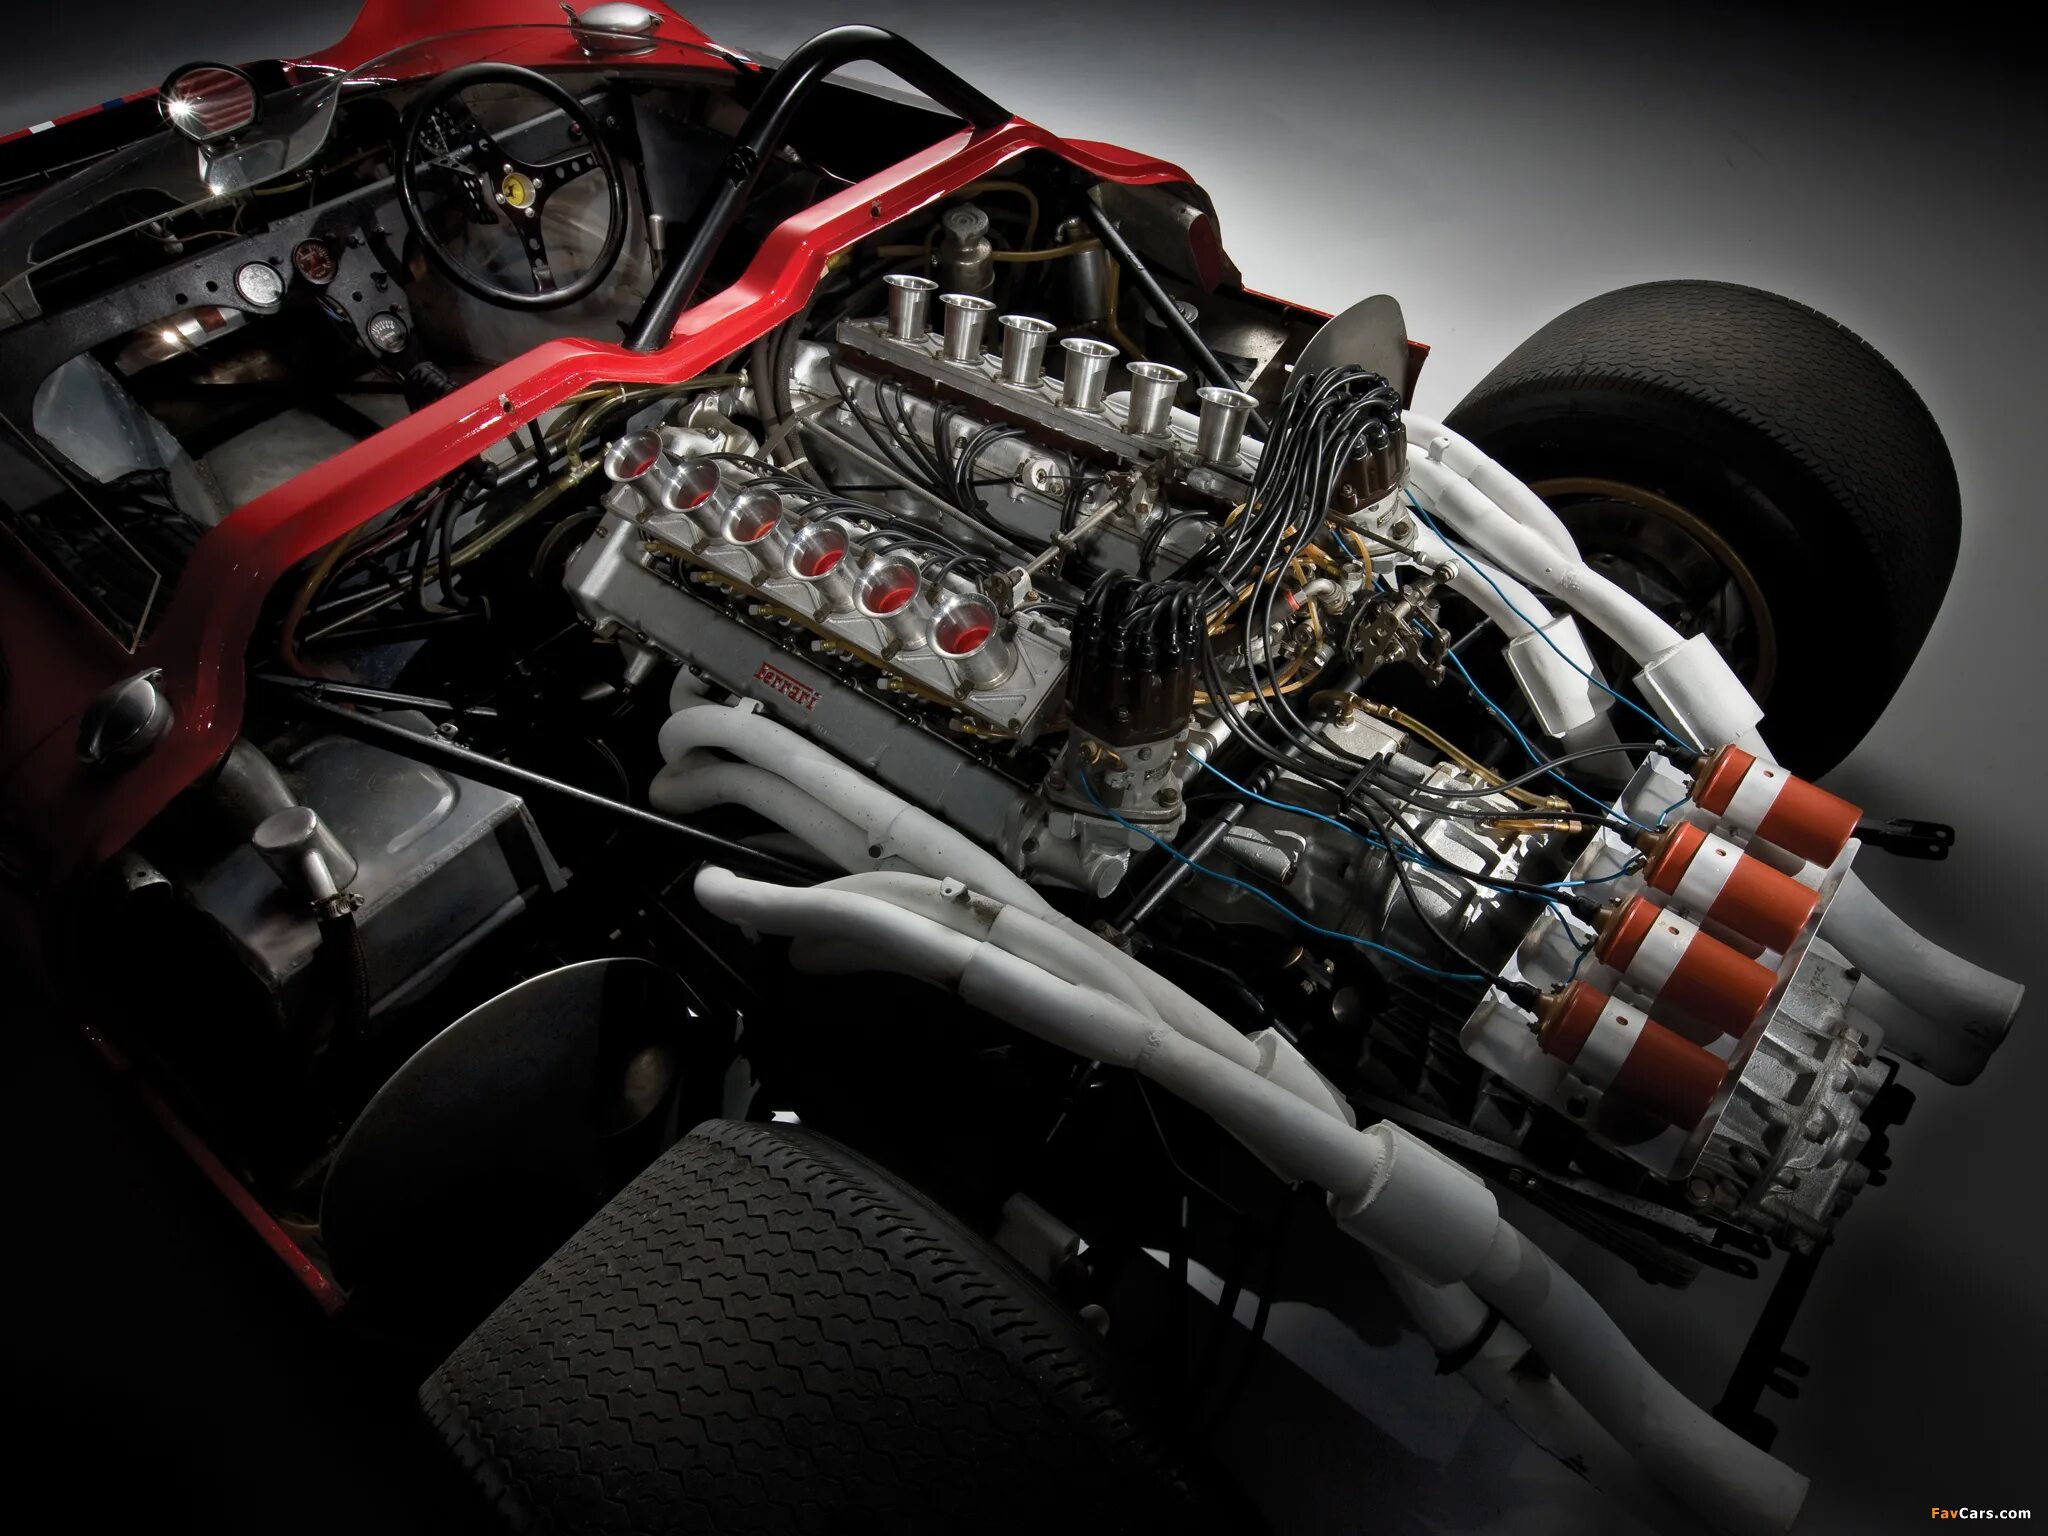 Автомобили с двигателем 1 литр. Ferrari 330 p4 двигатель. Ferrari f140 engine. Мотор Феррари v12. Ferrari p330 p4.